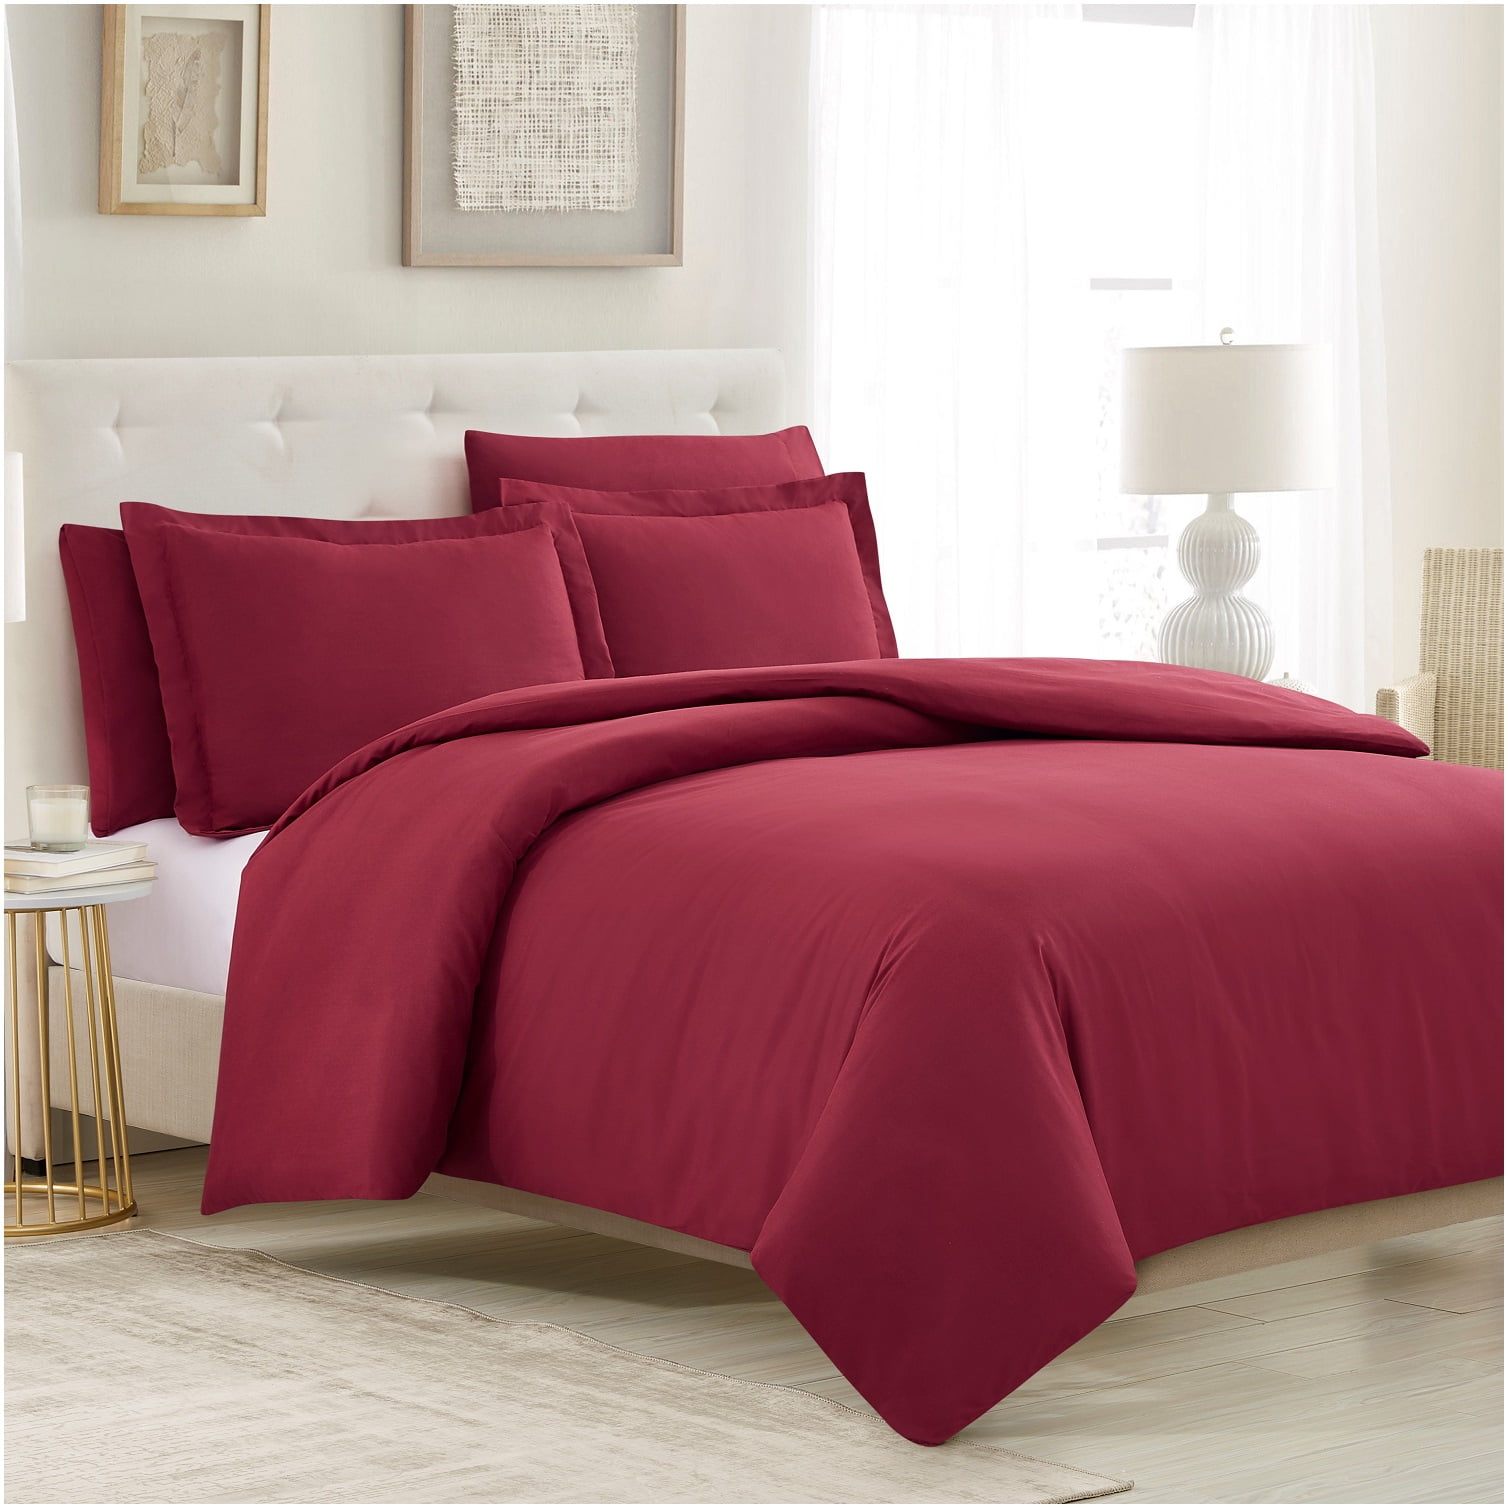 Details about   Silk Summer Quilt Air Condition Blanket Satin Jacquard Large Sz Adult Comforter 